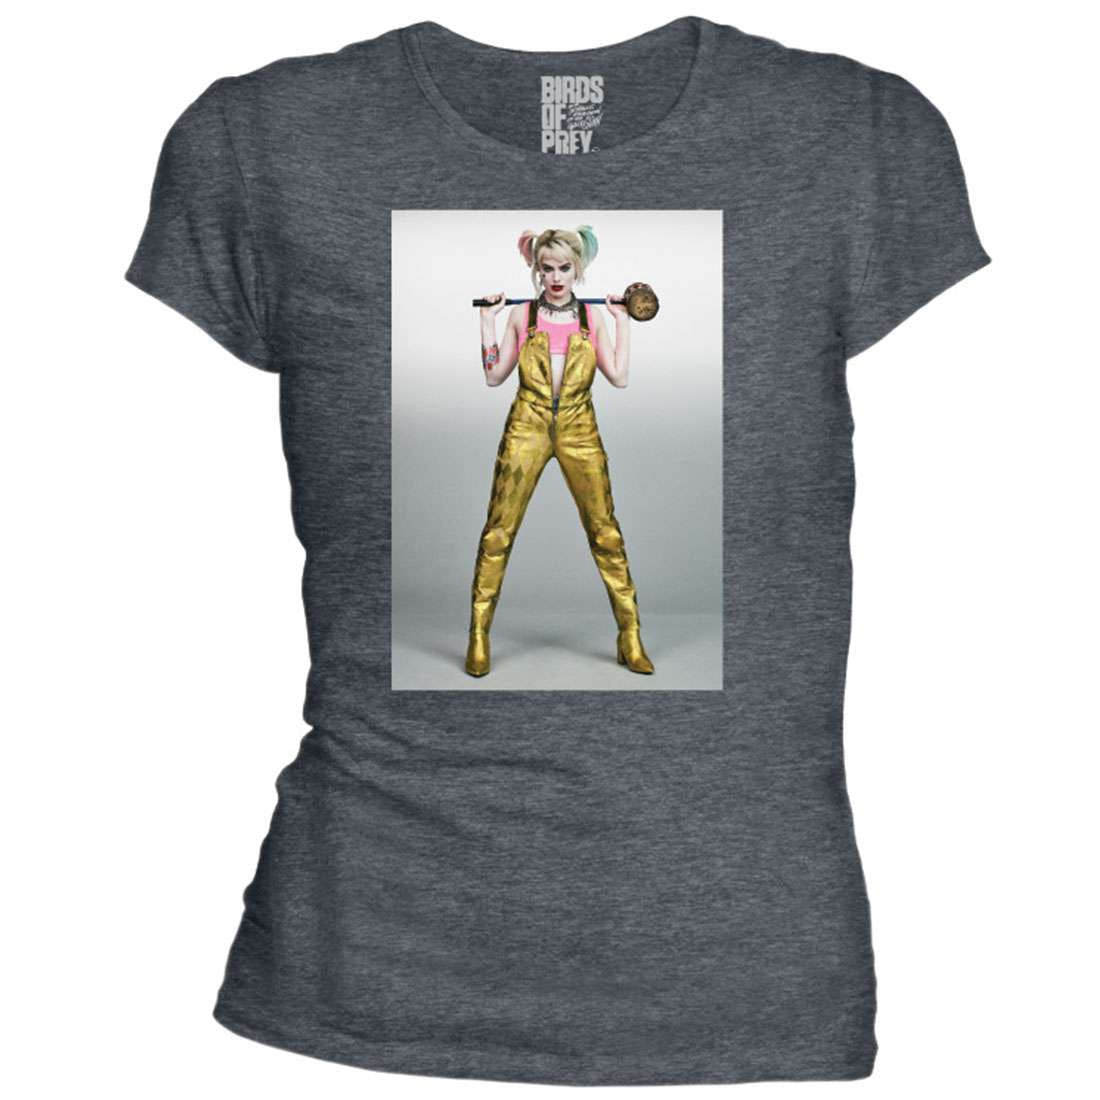 Birds of Prey DC Comics Women's T-Shirt - Harley Bad Pose